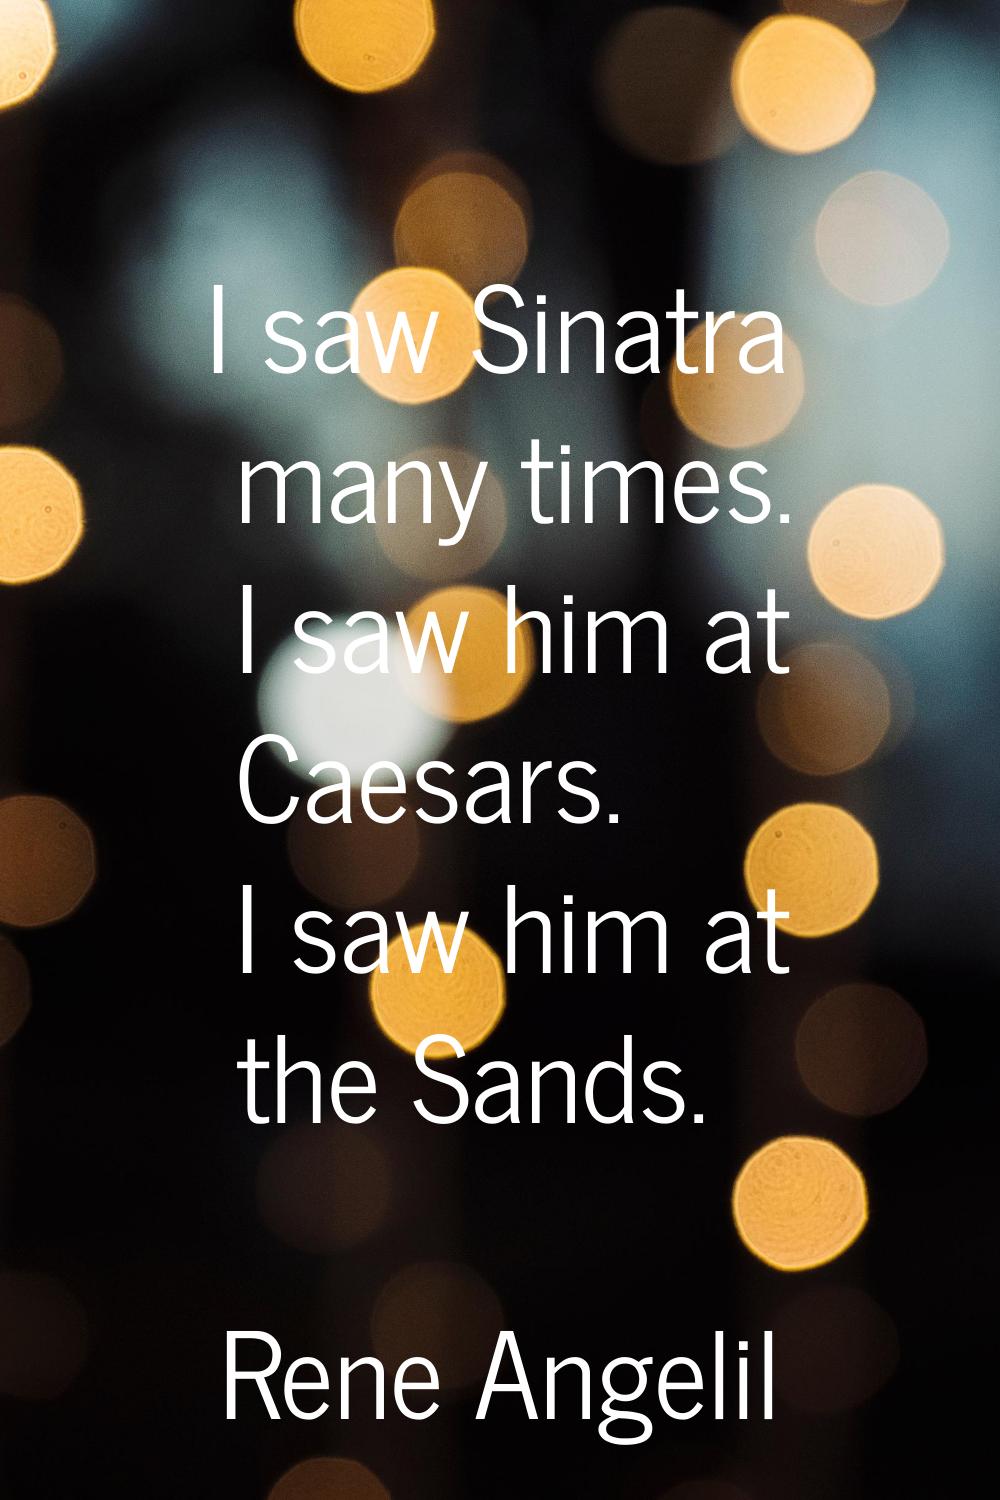 I saw Sinatra many times. I saw him at Caesars. I saw him at the Sands.